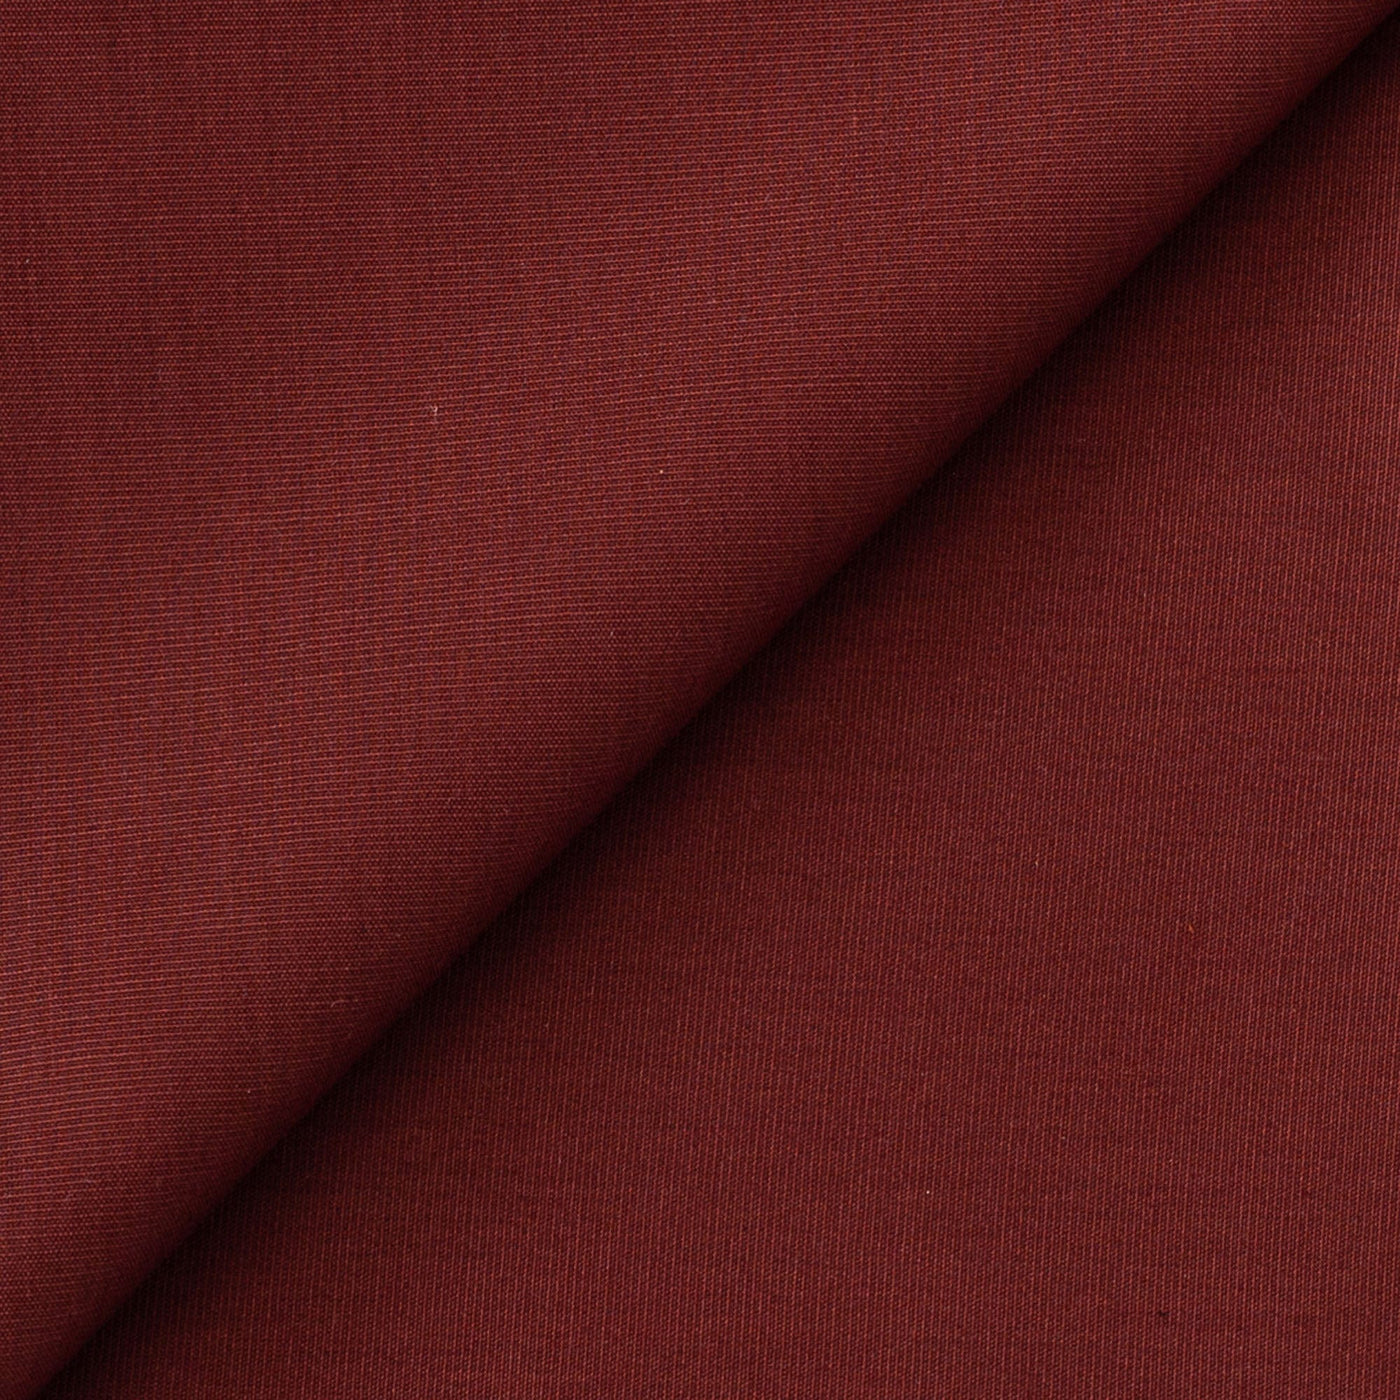 Fabric Pandit Cut Piece (CUT PIECE) Dark Maroon Textured Cotton Fabric (Width 58 inch)